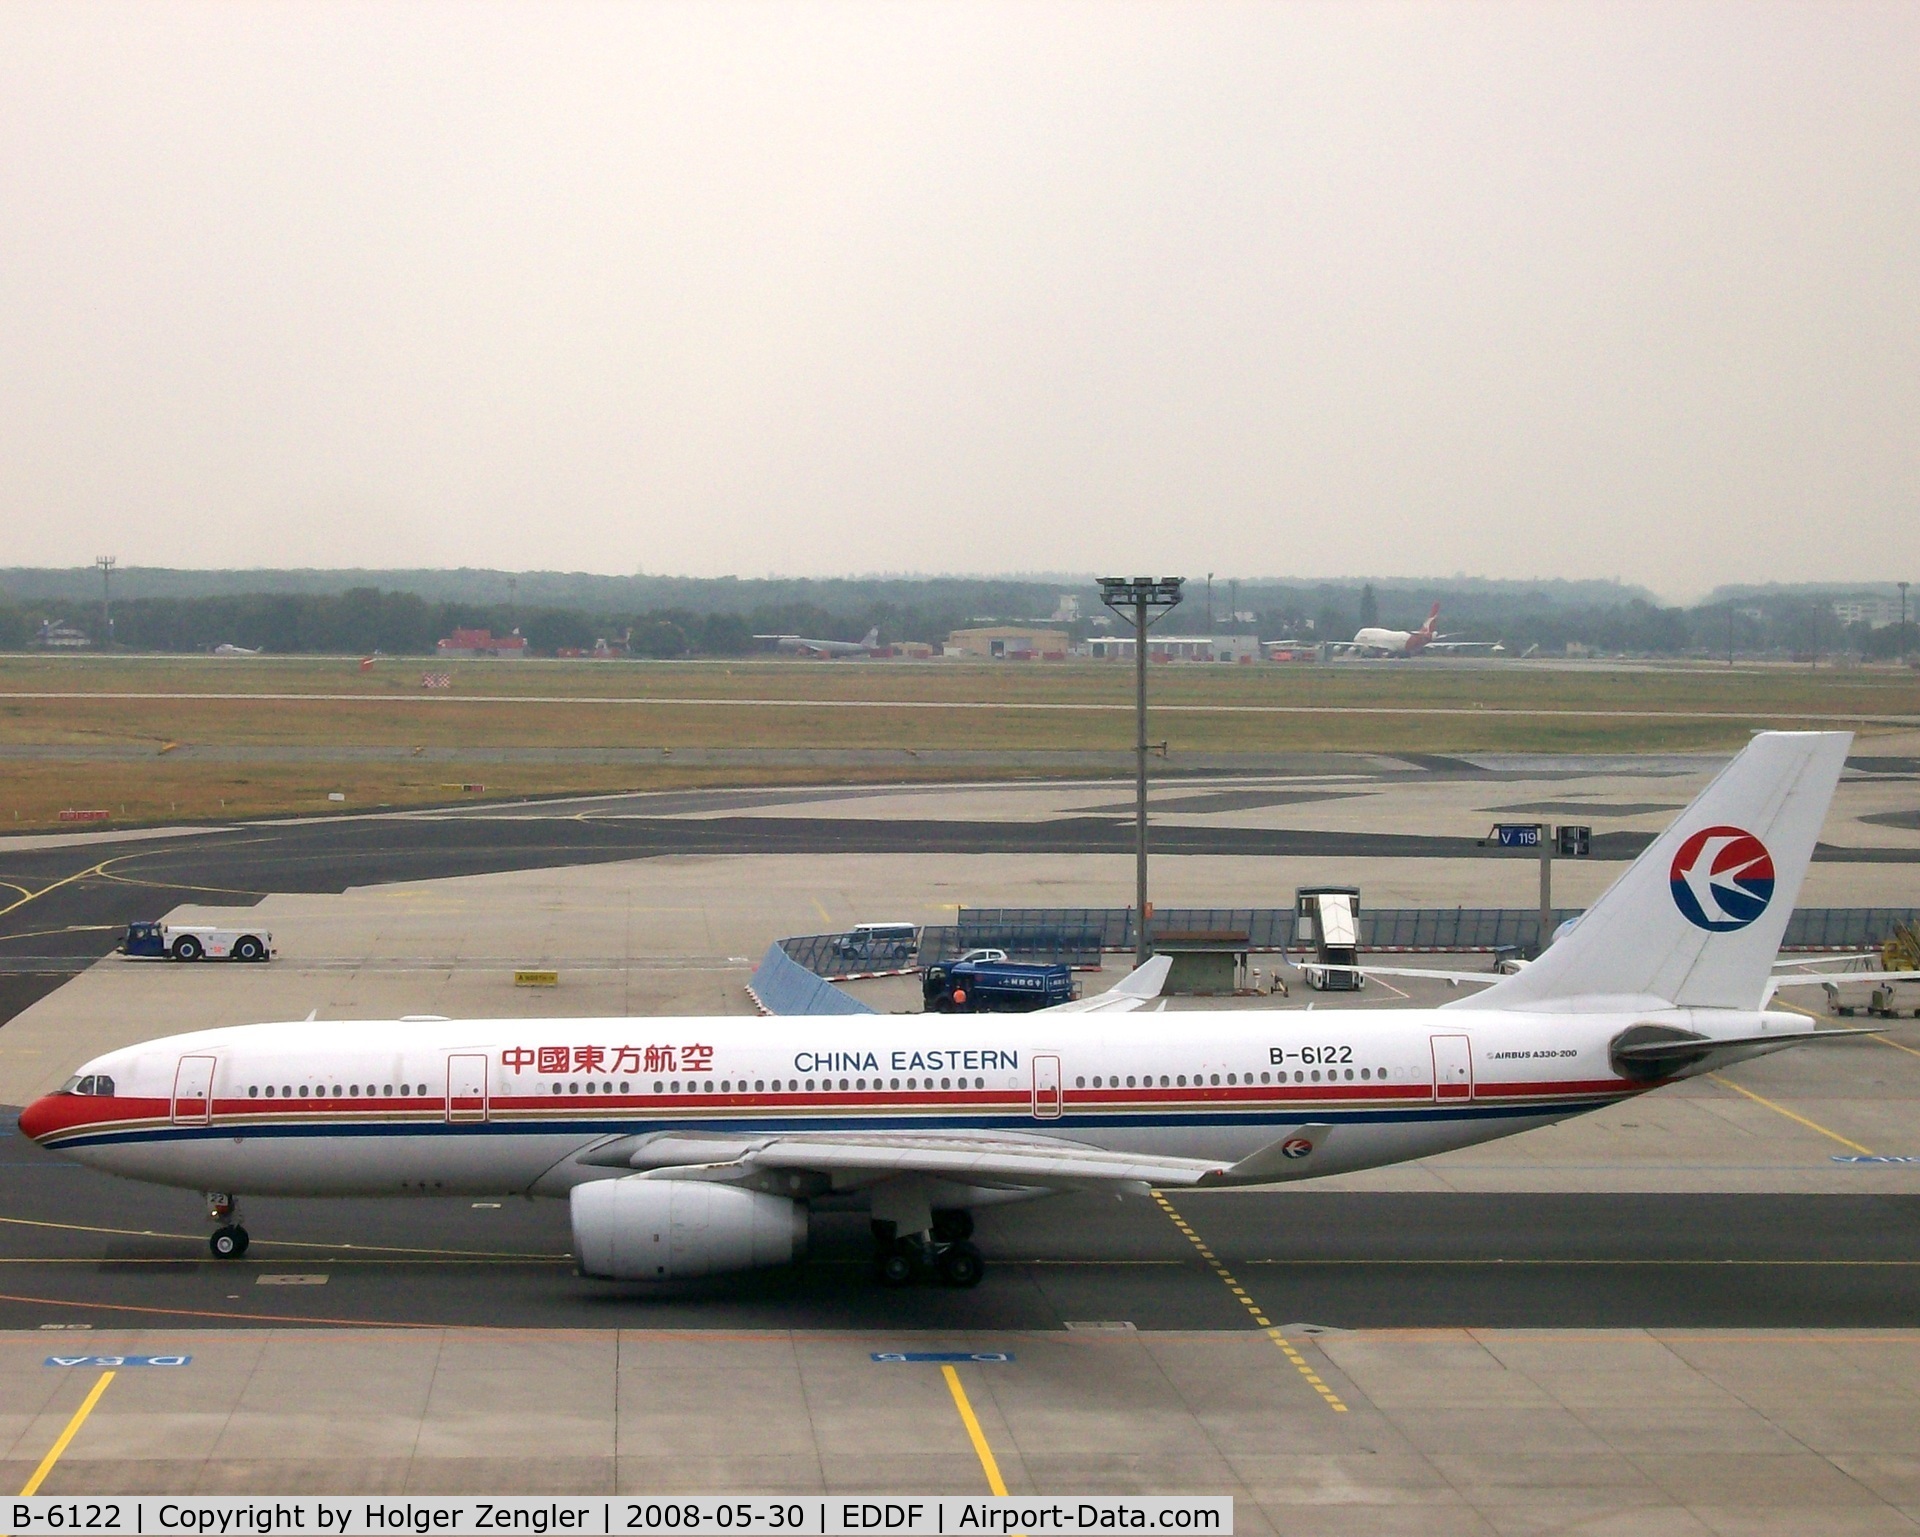 B-6122, 2006 Airbus A330-243 C/N 732, CHINA EASTERN Airbus 320-200